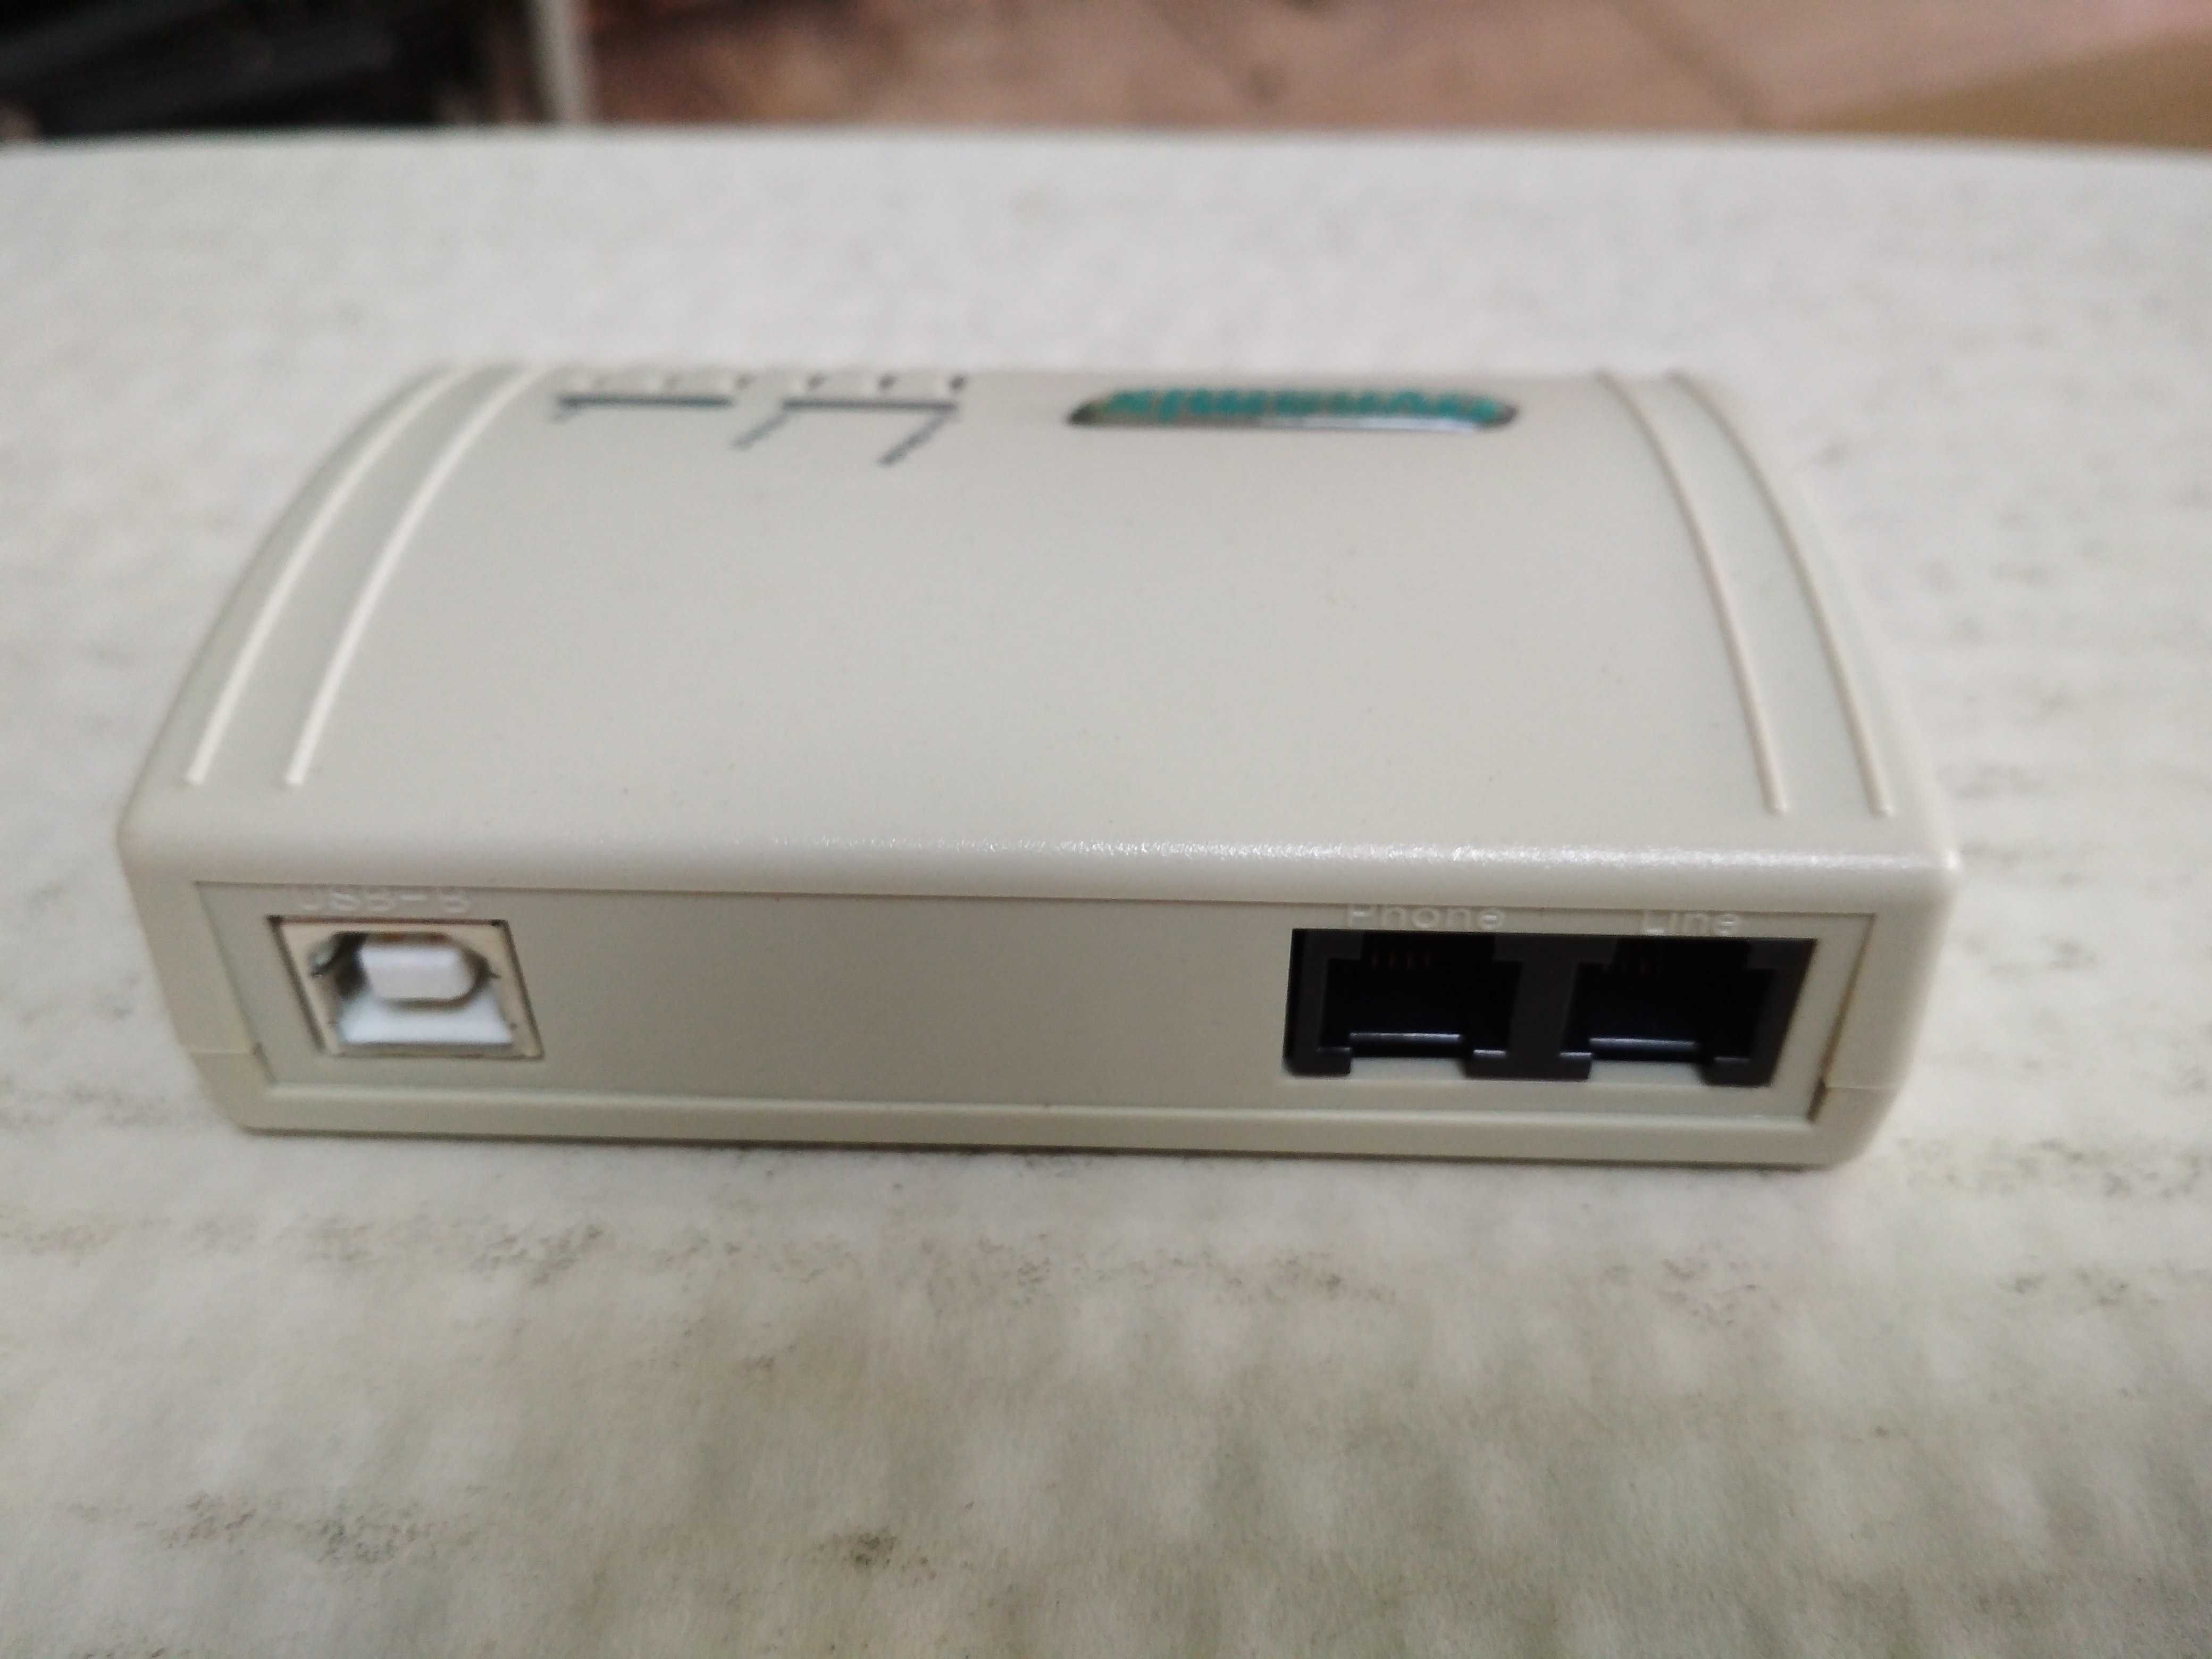 Dynamix Tiger USB адаптер PUA-310